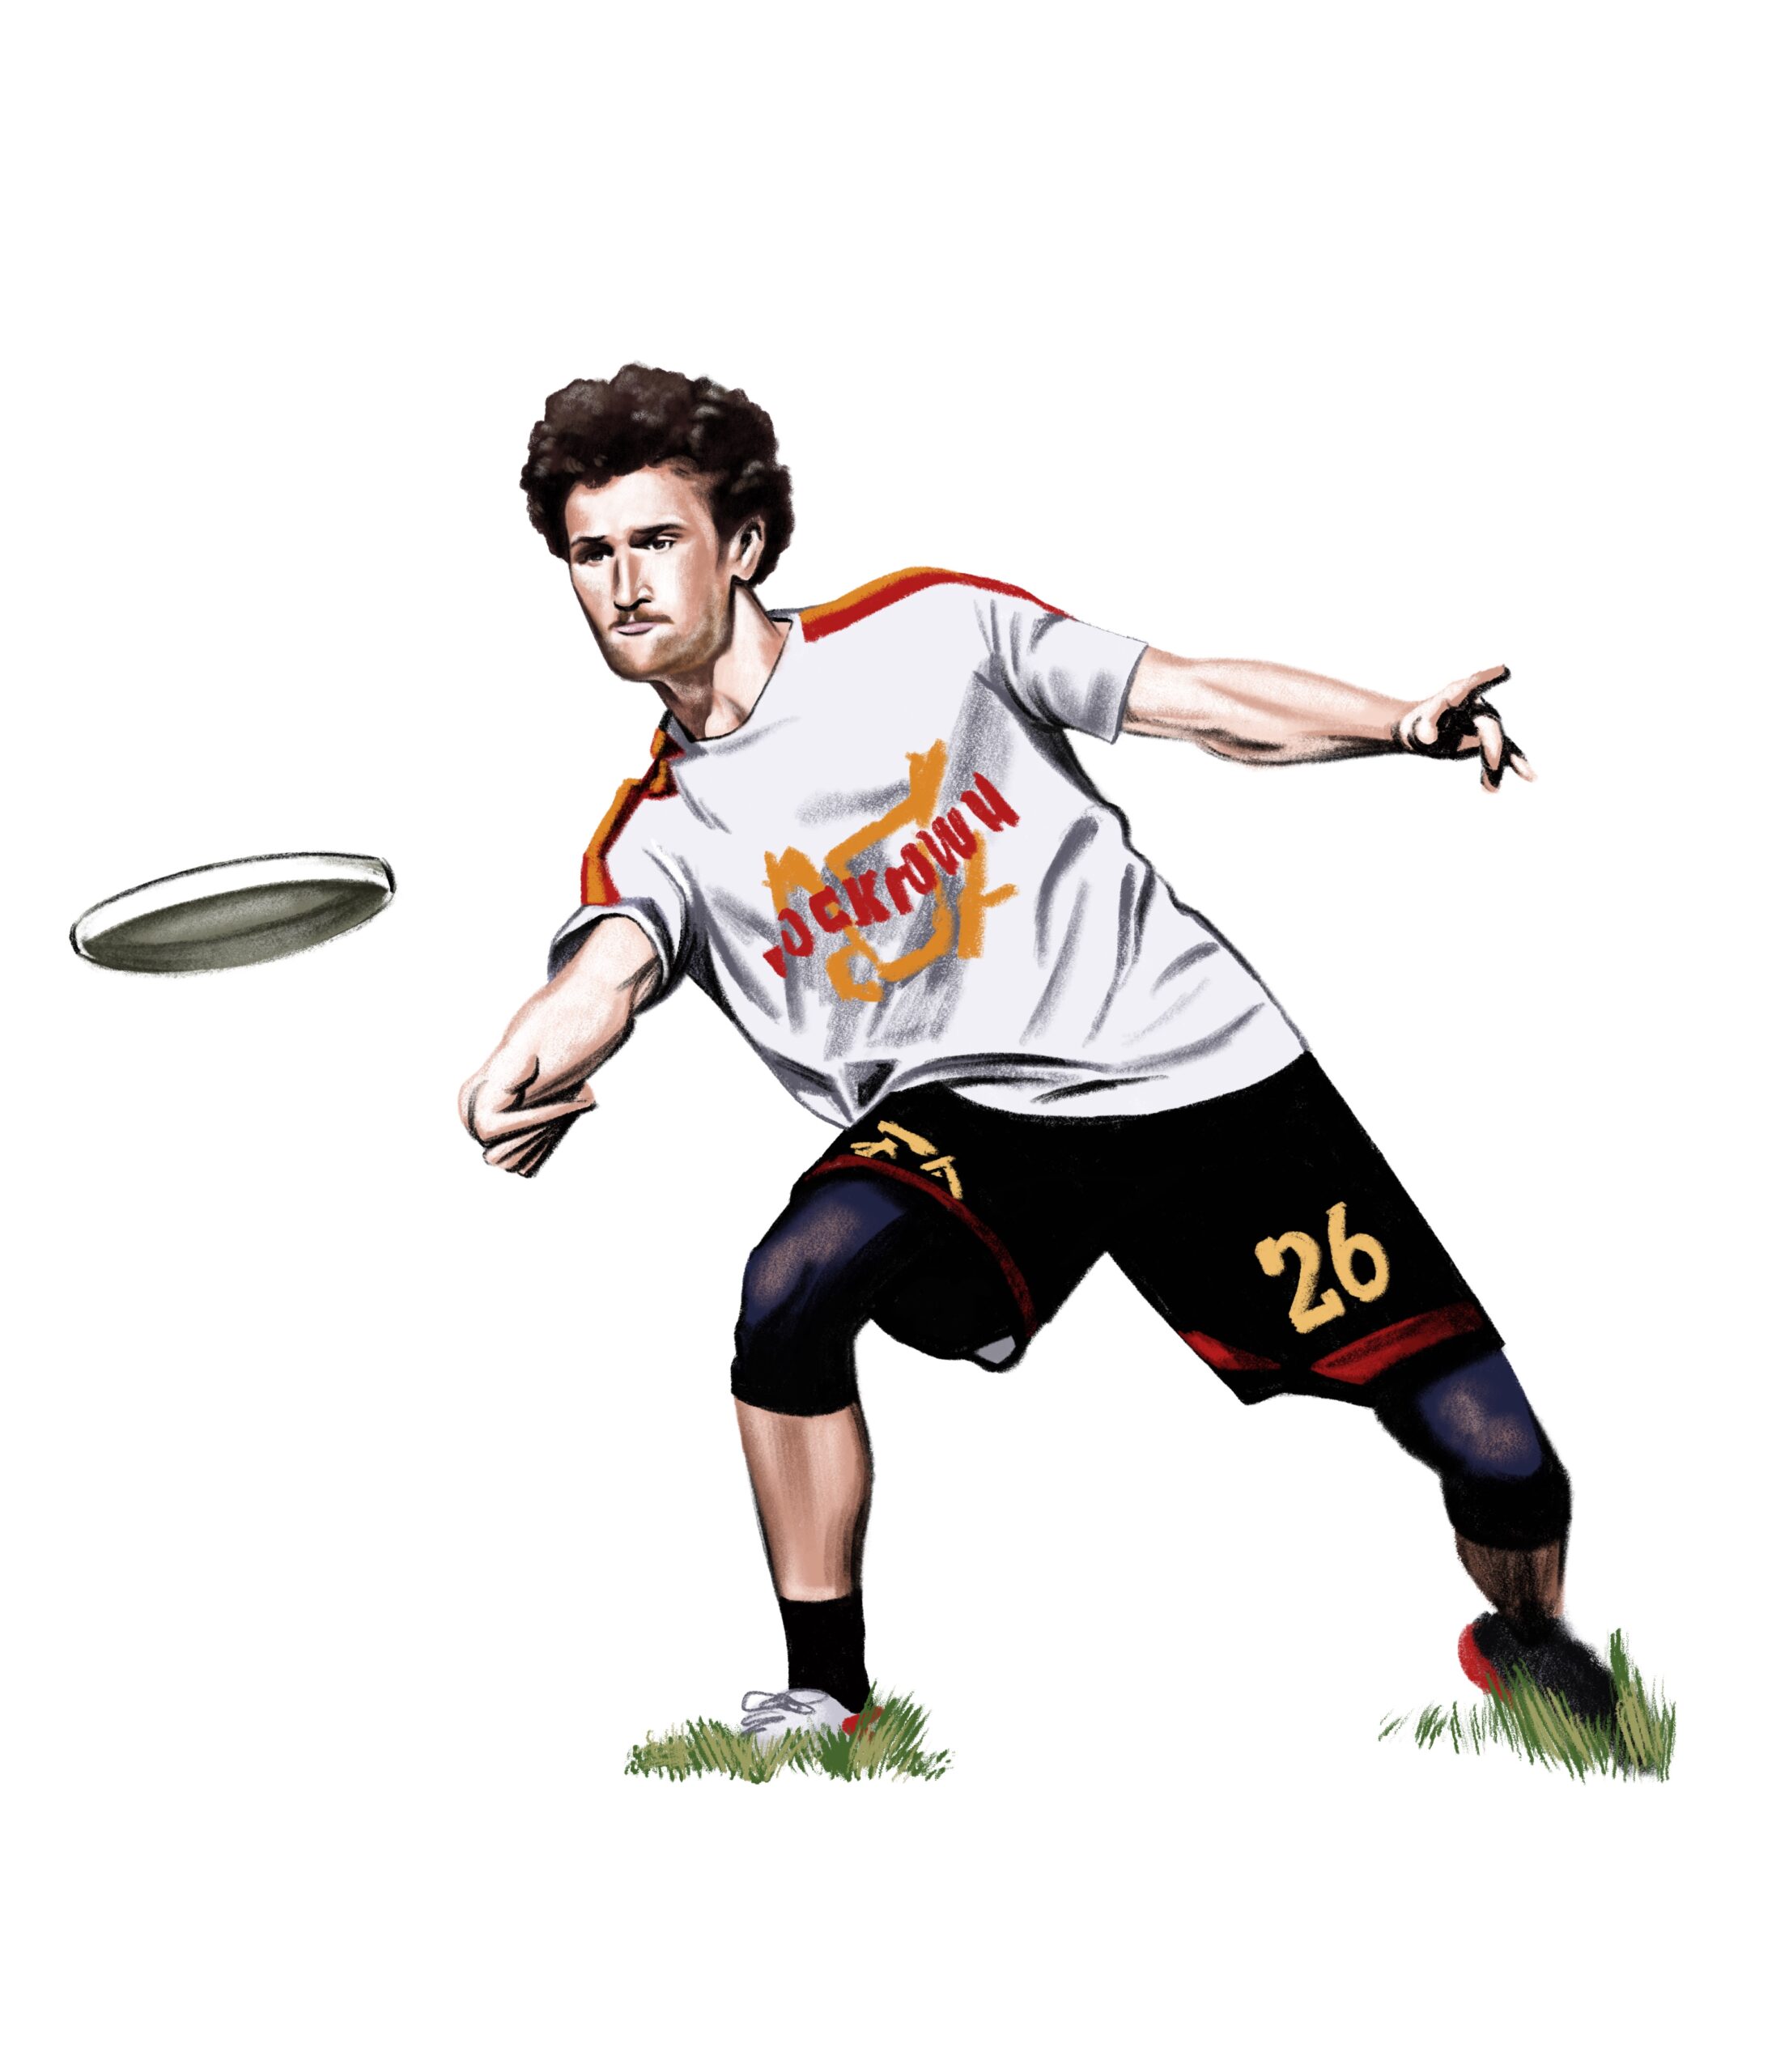 Illustration of Daniel Brunker playing Ultimate Frisbee